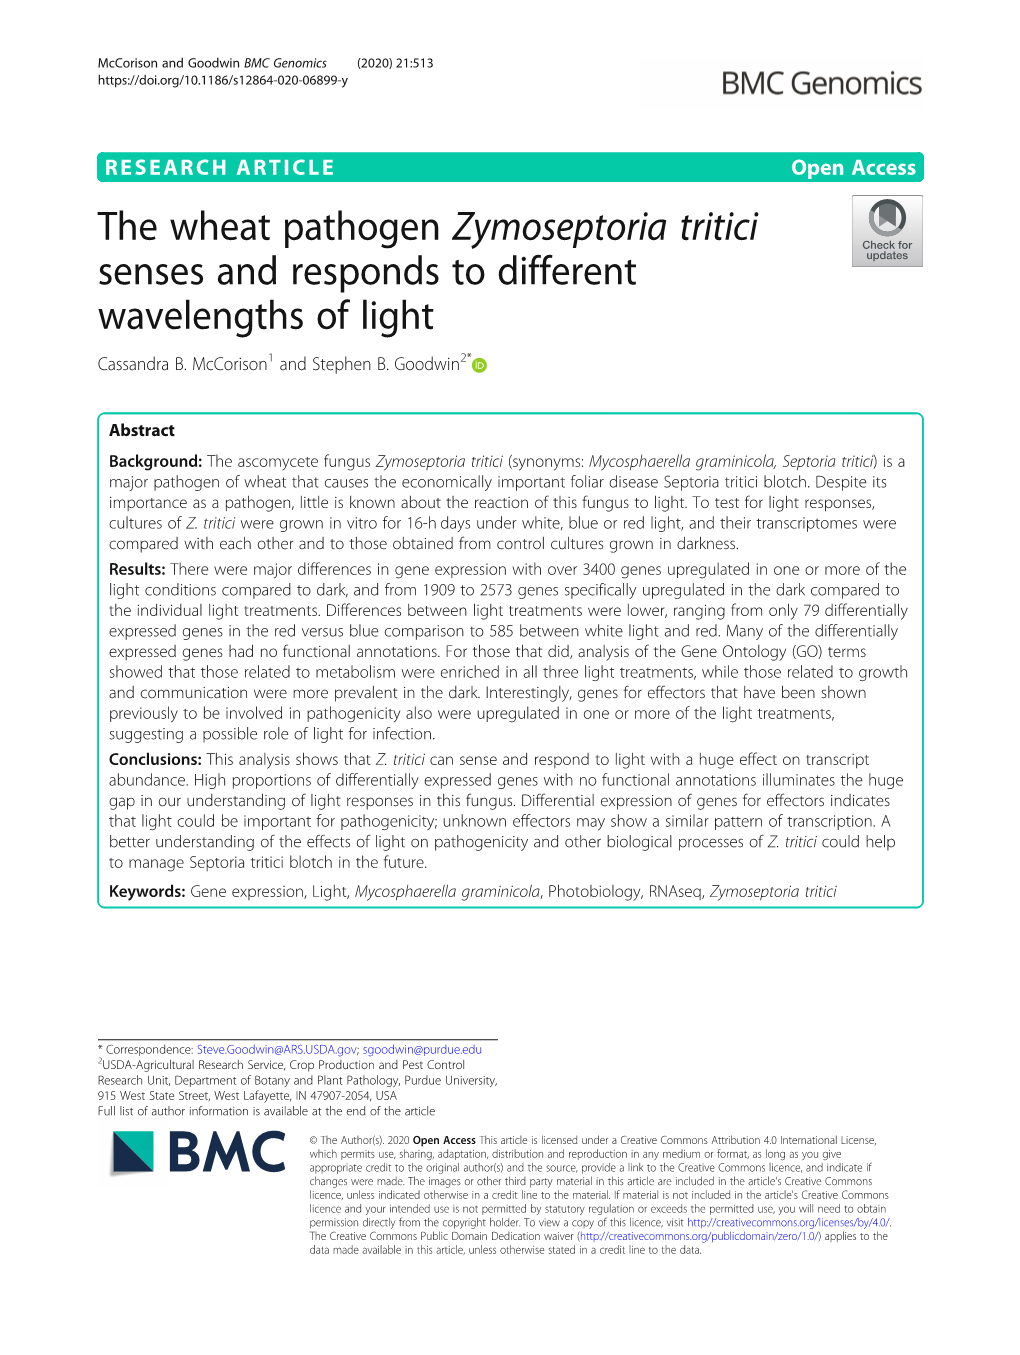 The Wheat Pathogen Zymoseptoria Tritici Senses and Responds to Different Wavelengths of Light Cassandra B